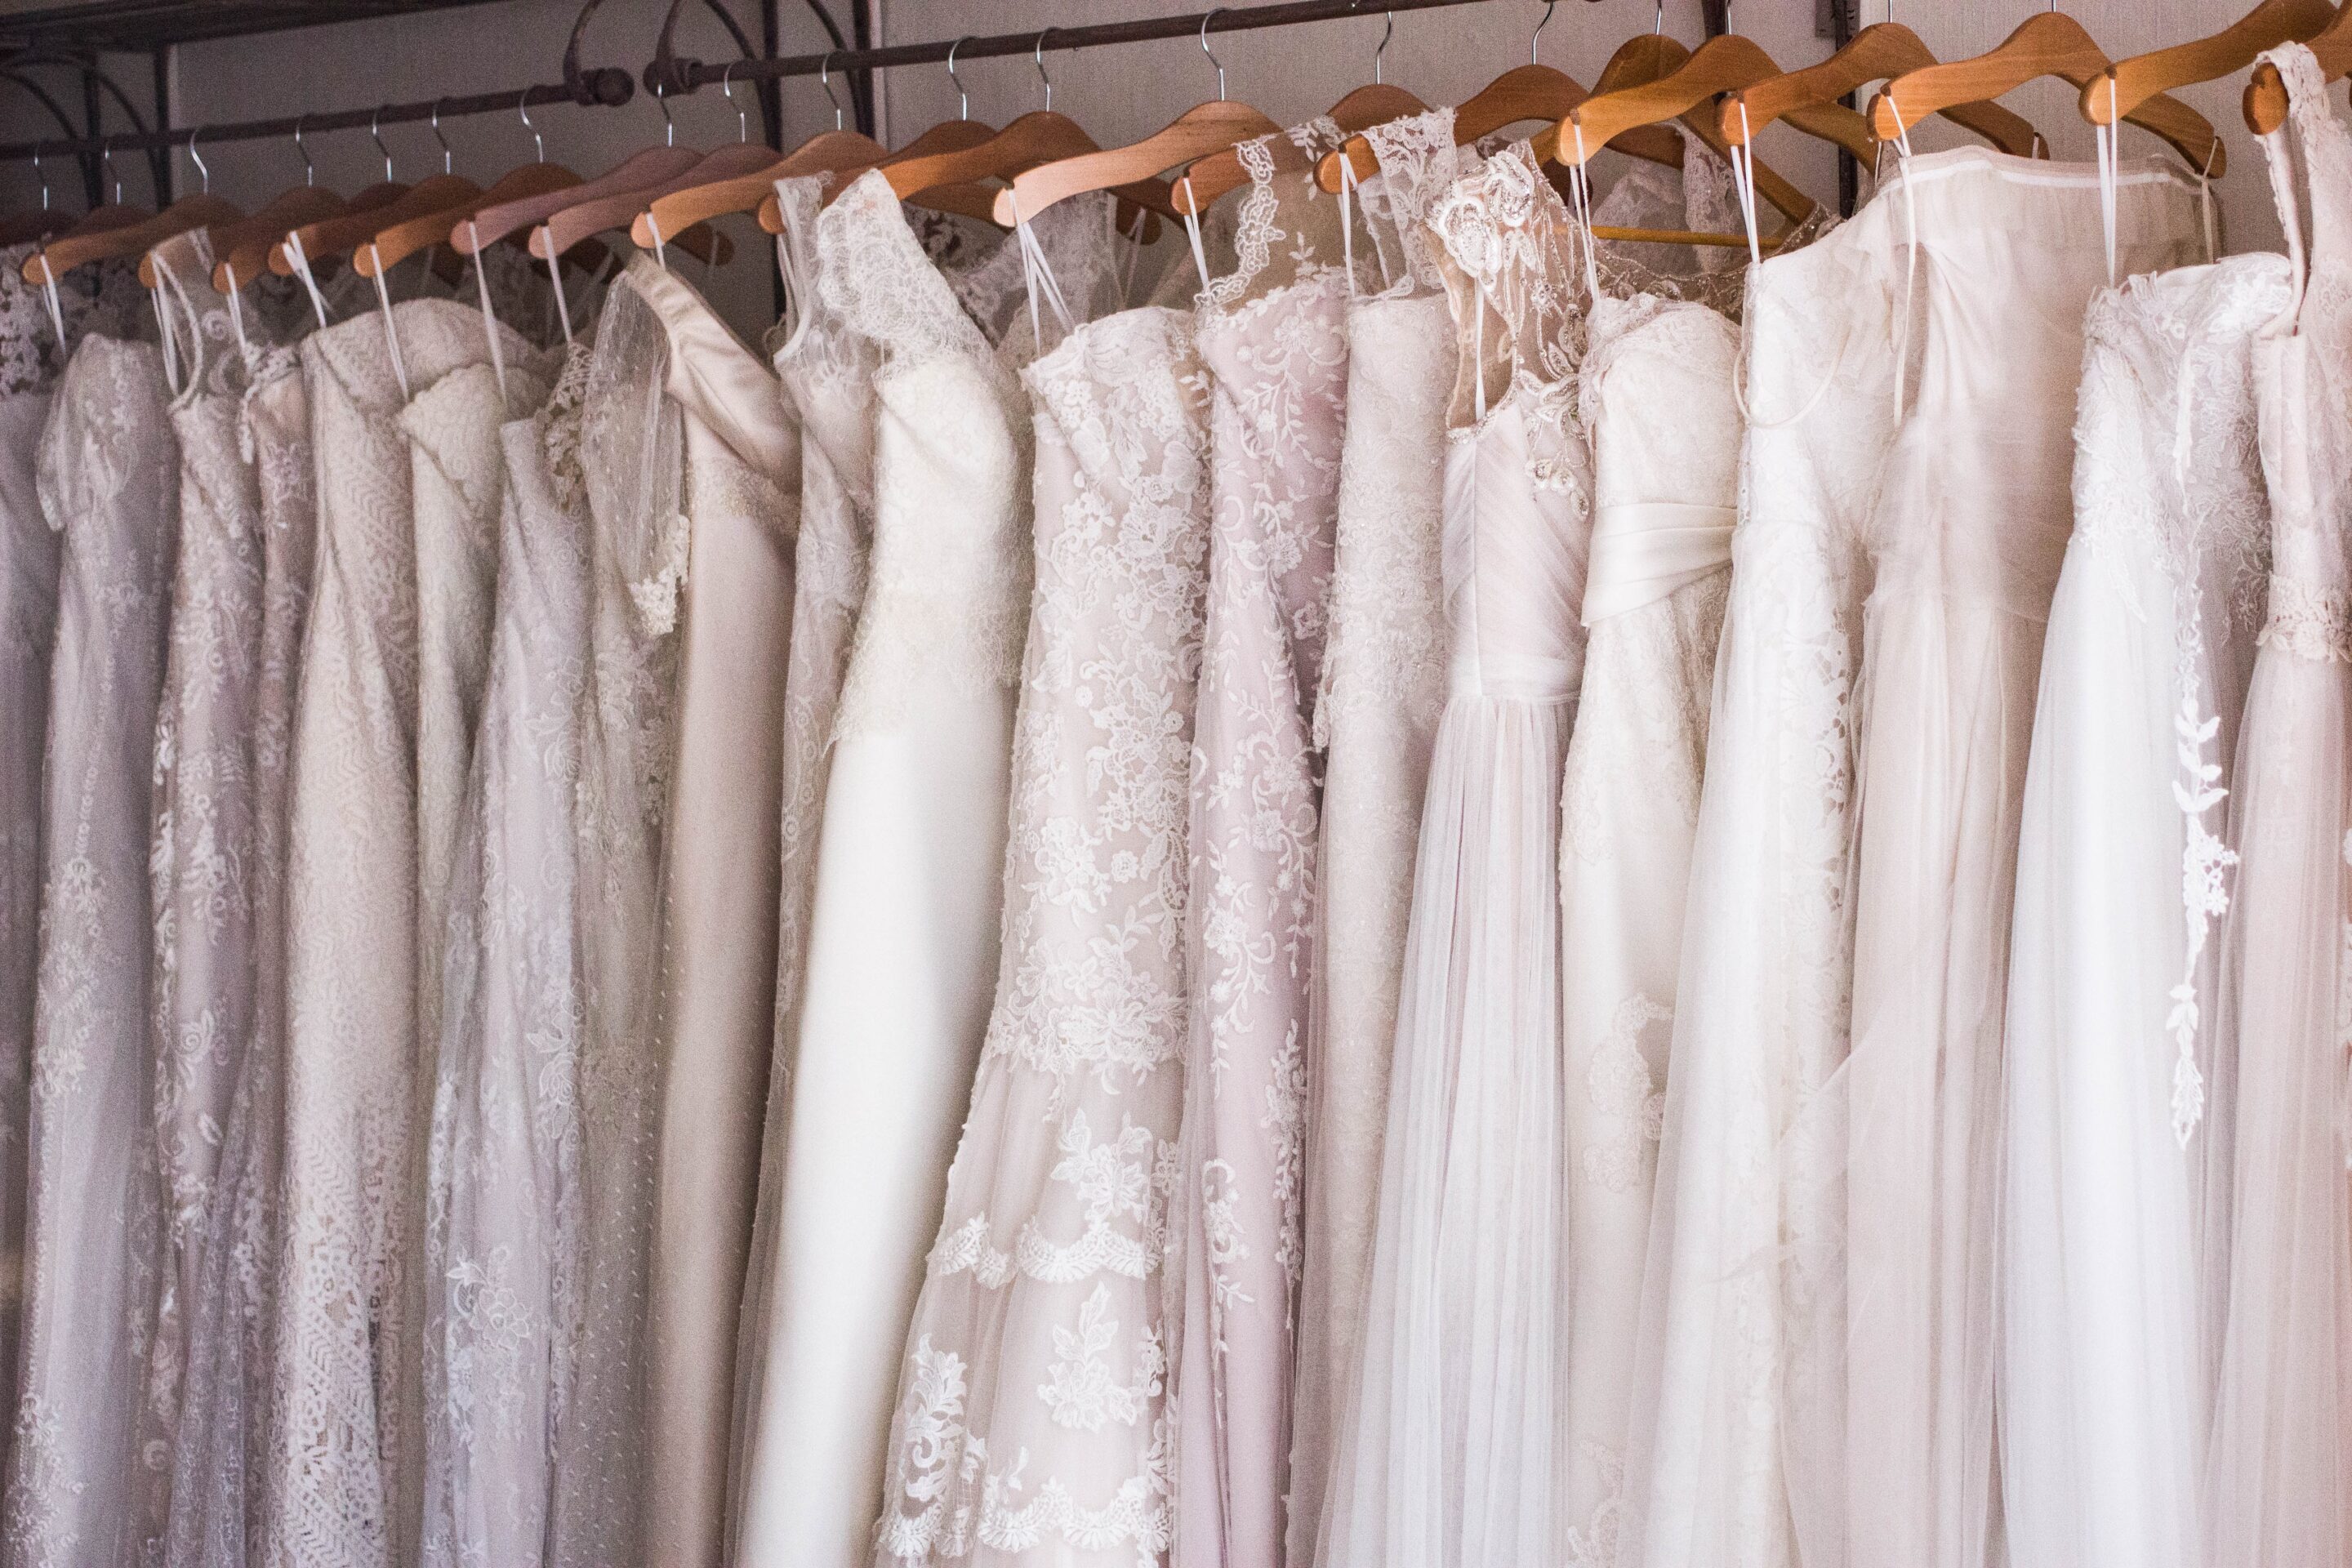 Beautiful dresses neatly hung in a closet